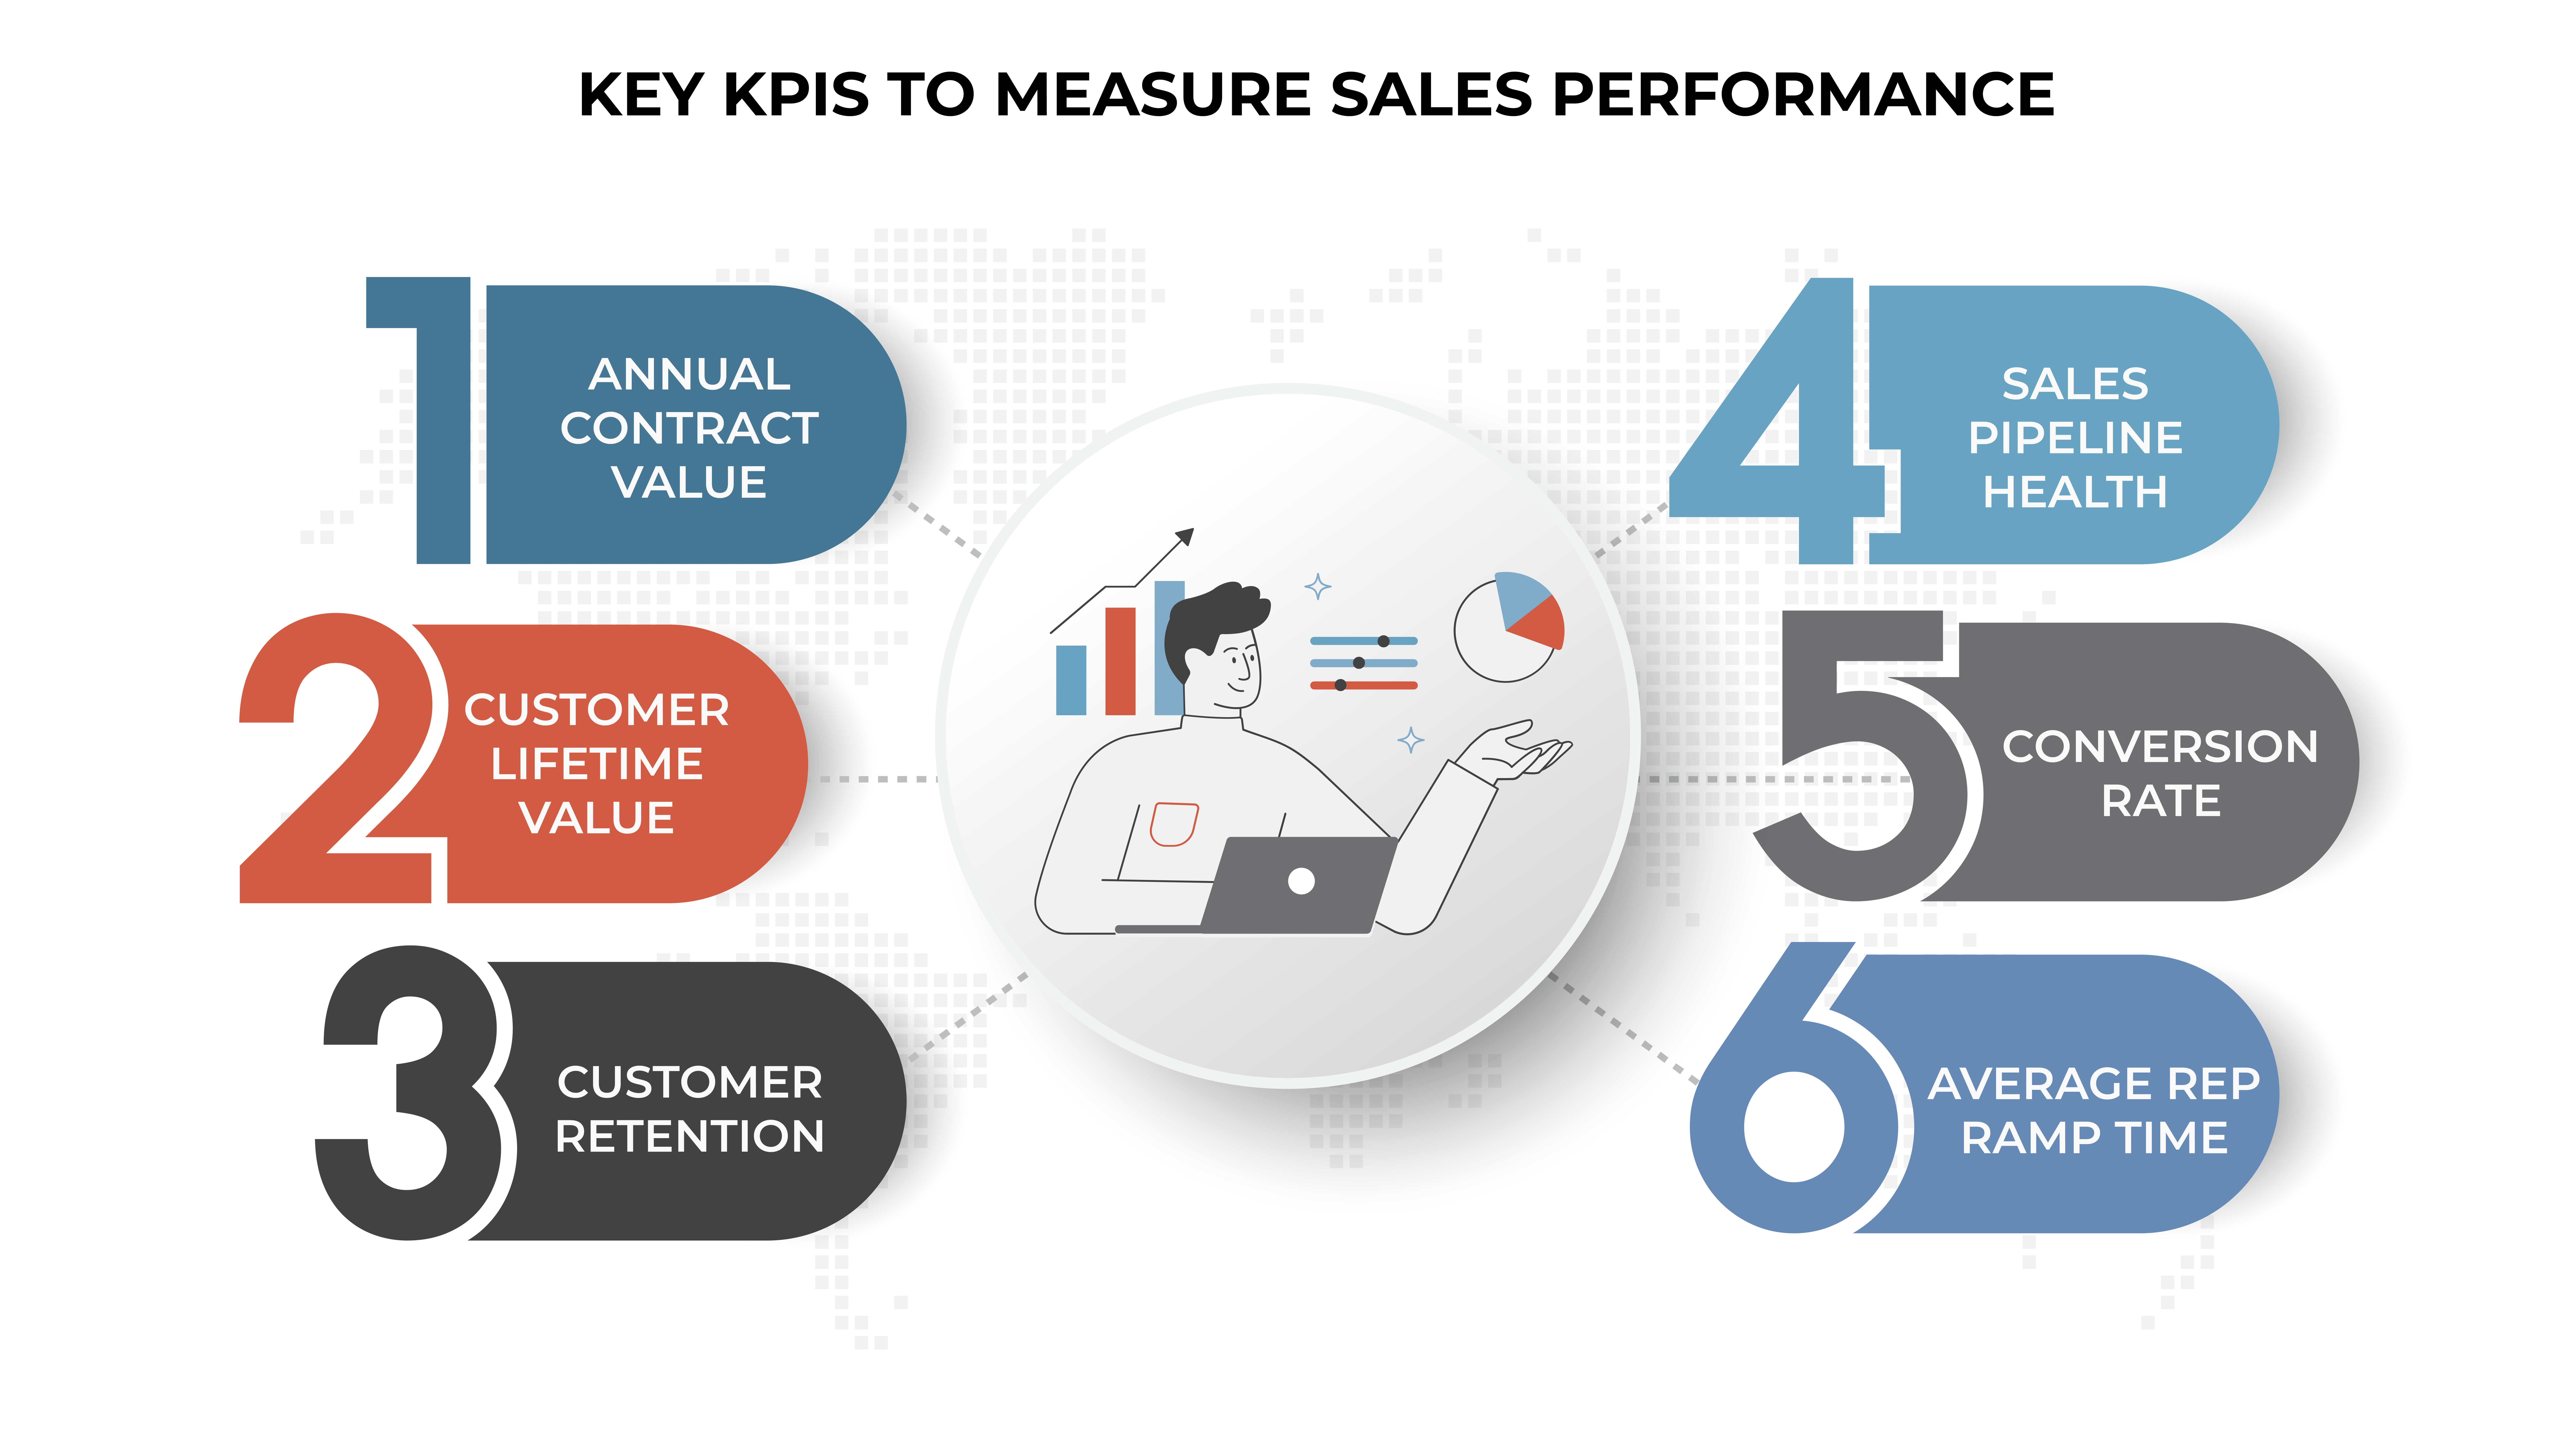 Key KPIS to measure sales performance